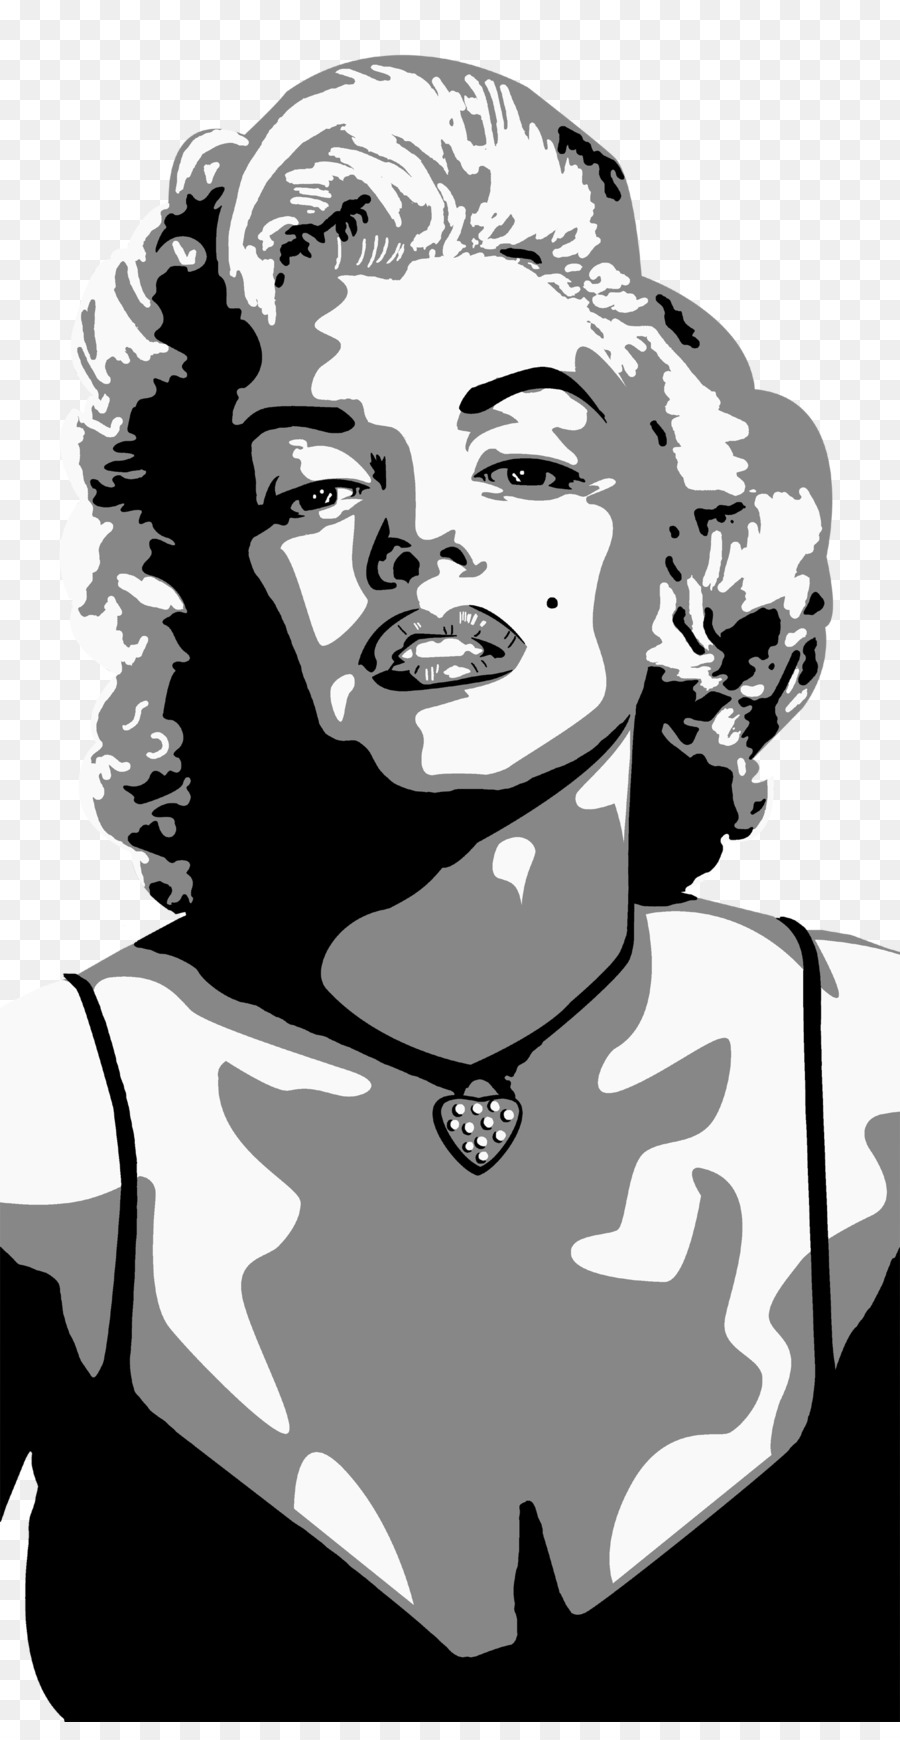 Marilyn Monroe Drawing Visual arts Actor - marilyn monroe png download - 900*1722 - Free Transparent Marilyn Monroe png Download.